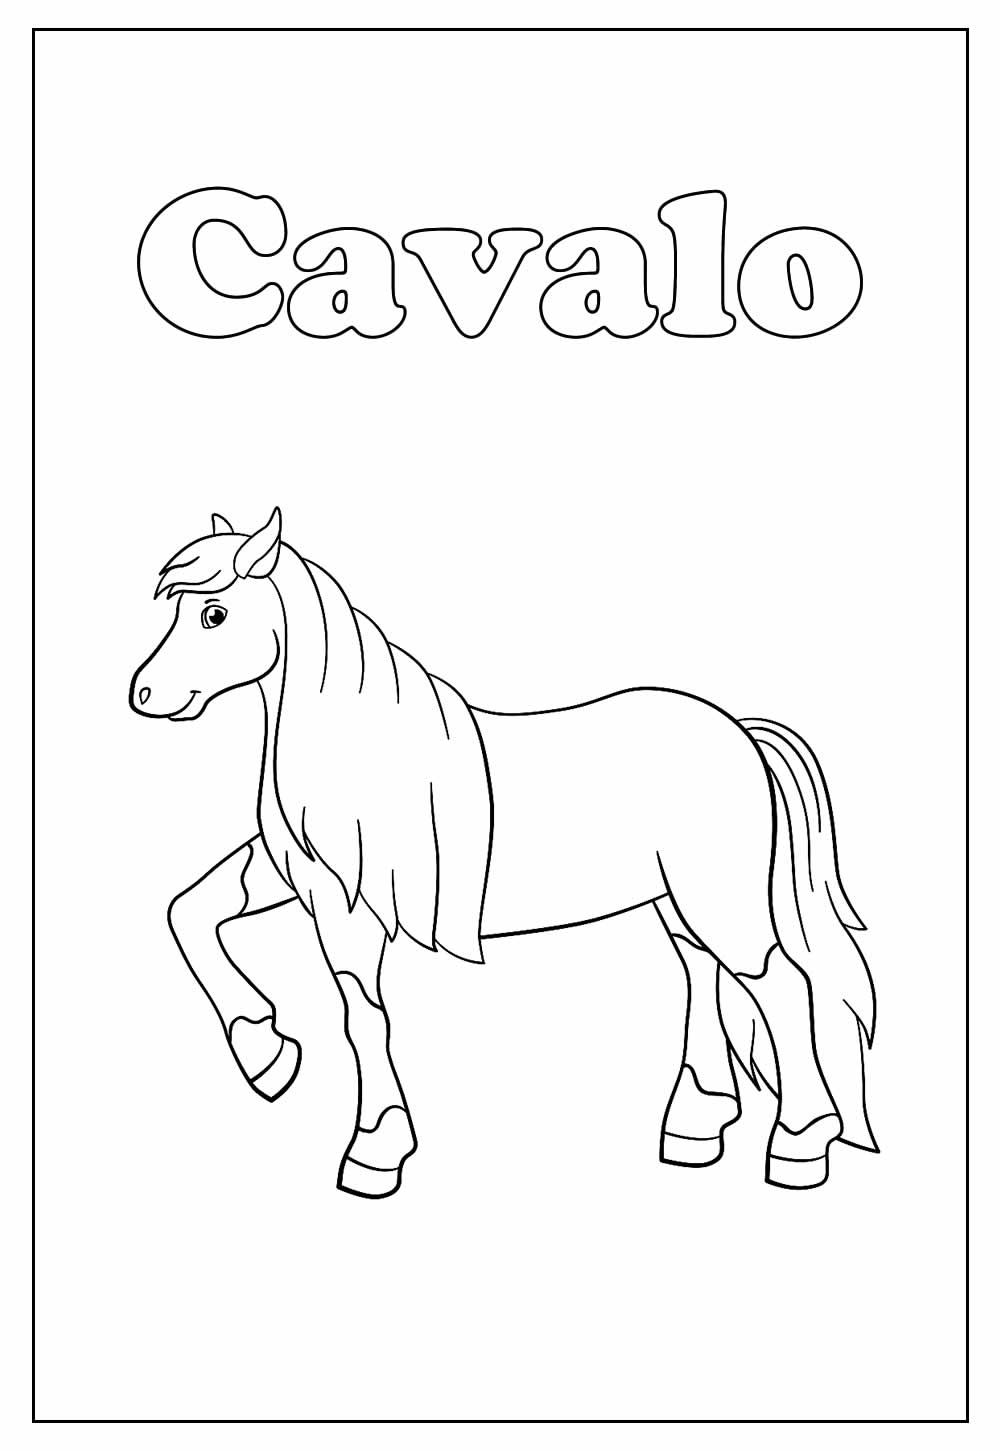 Desenho Educativo de Cavalo para colorir